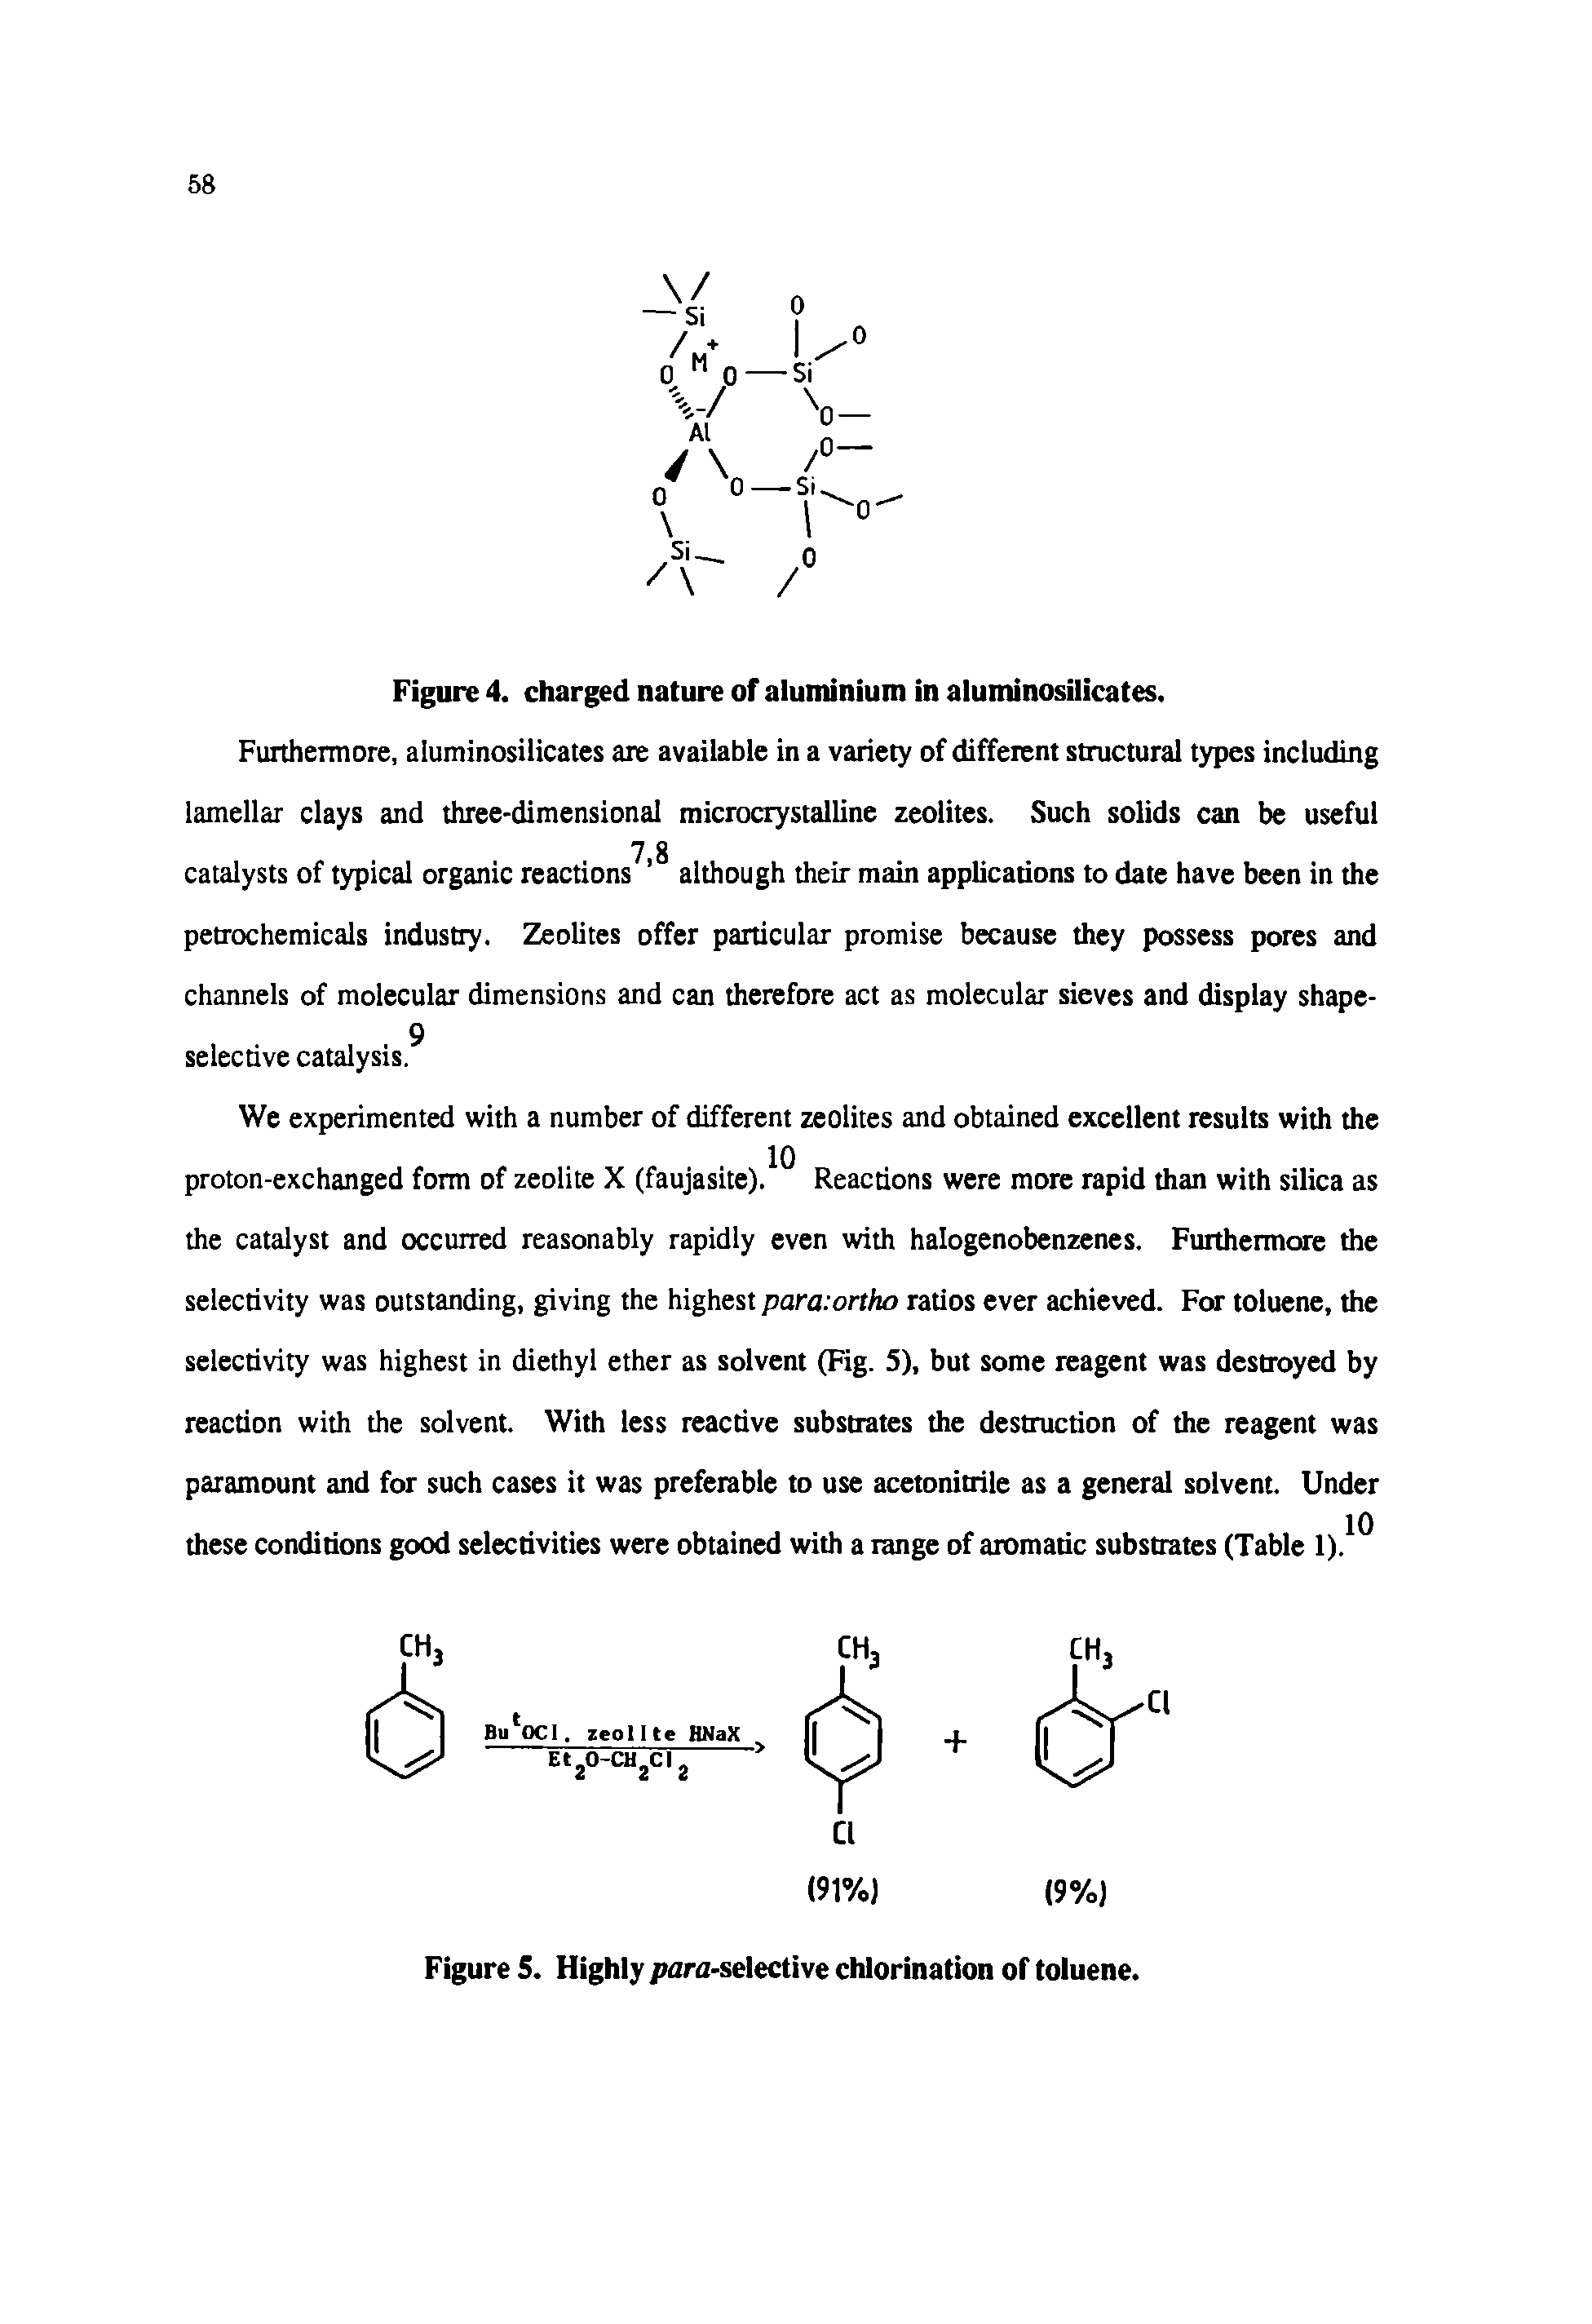 Figure 5. Highly para-selective chlorination of toluene.